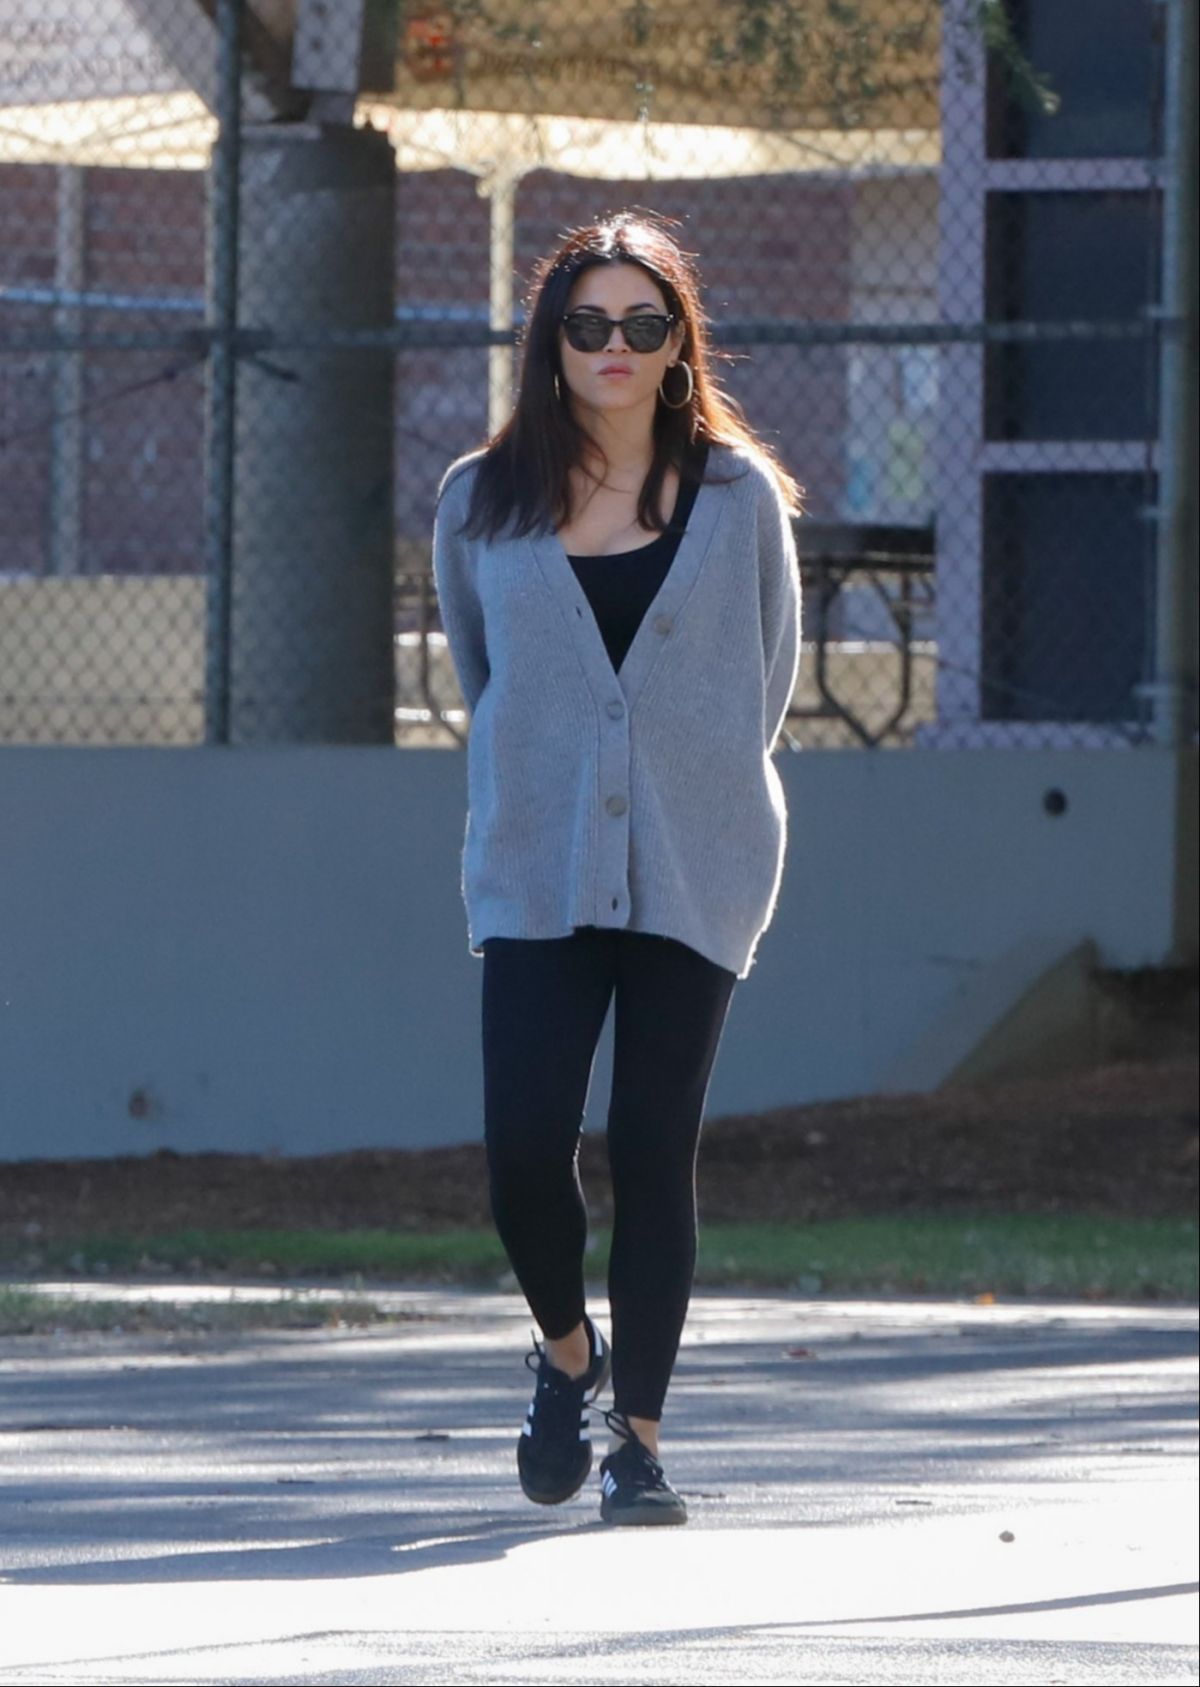 Jenna Dewan Park Outfit: Grey Cardigan & Tights